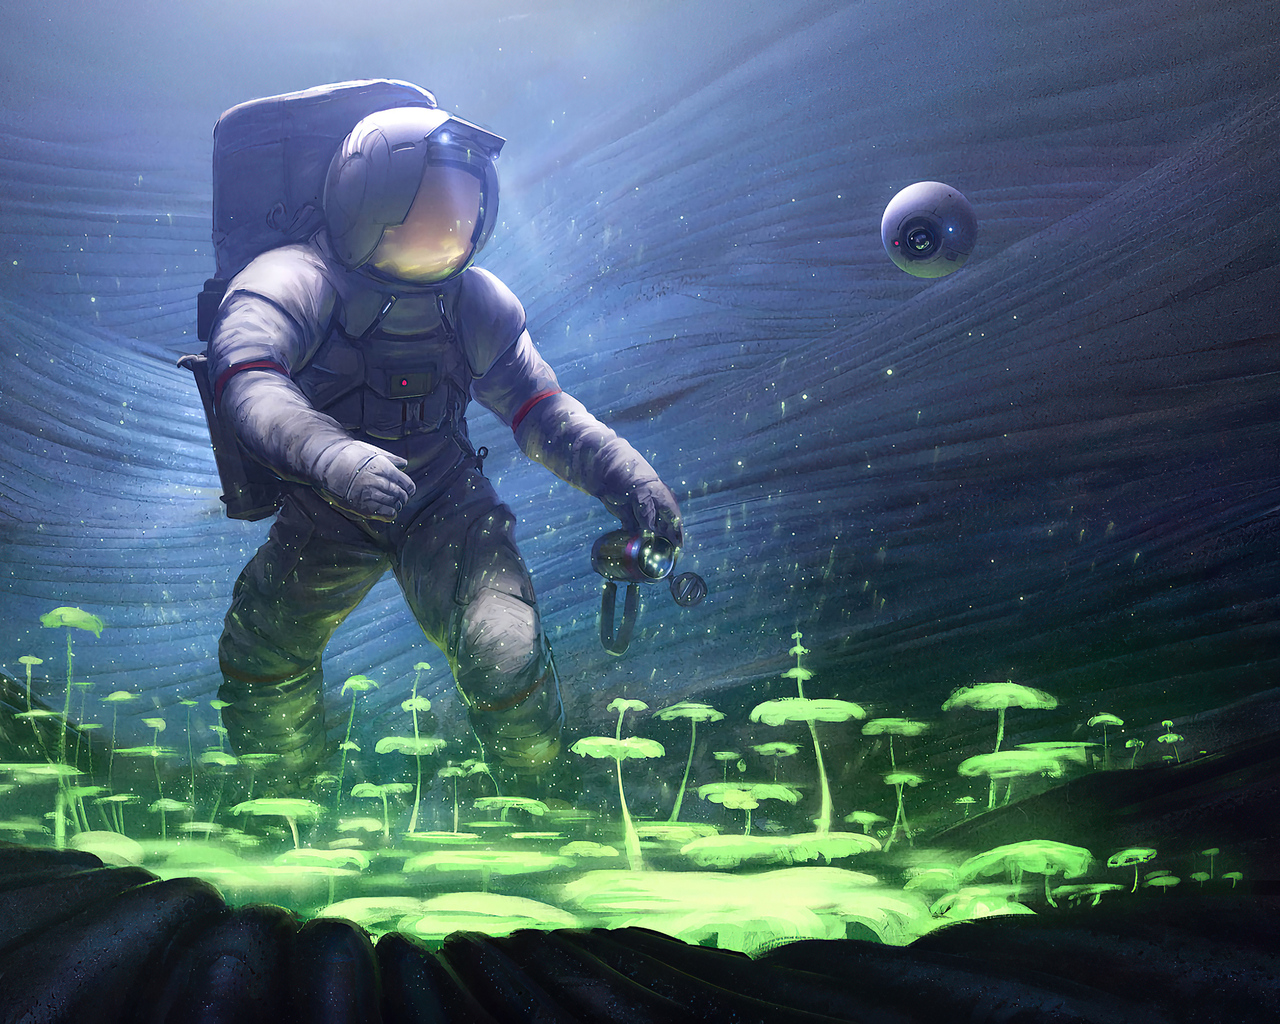 1280x1024 Scifi Astronaut Planting Trees Underwater 1280x1024 ...